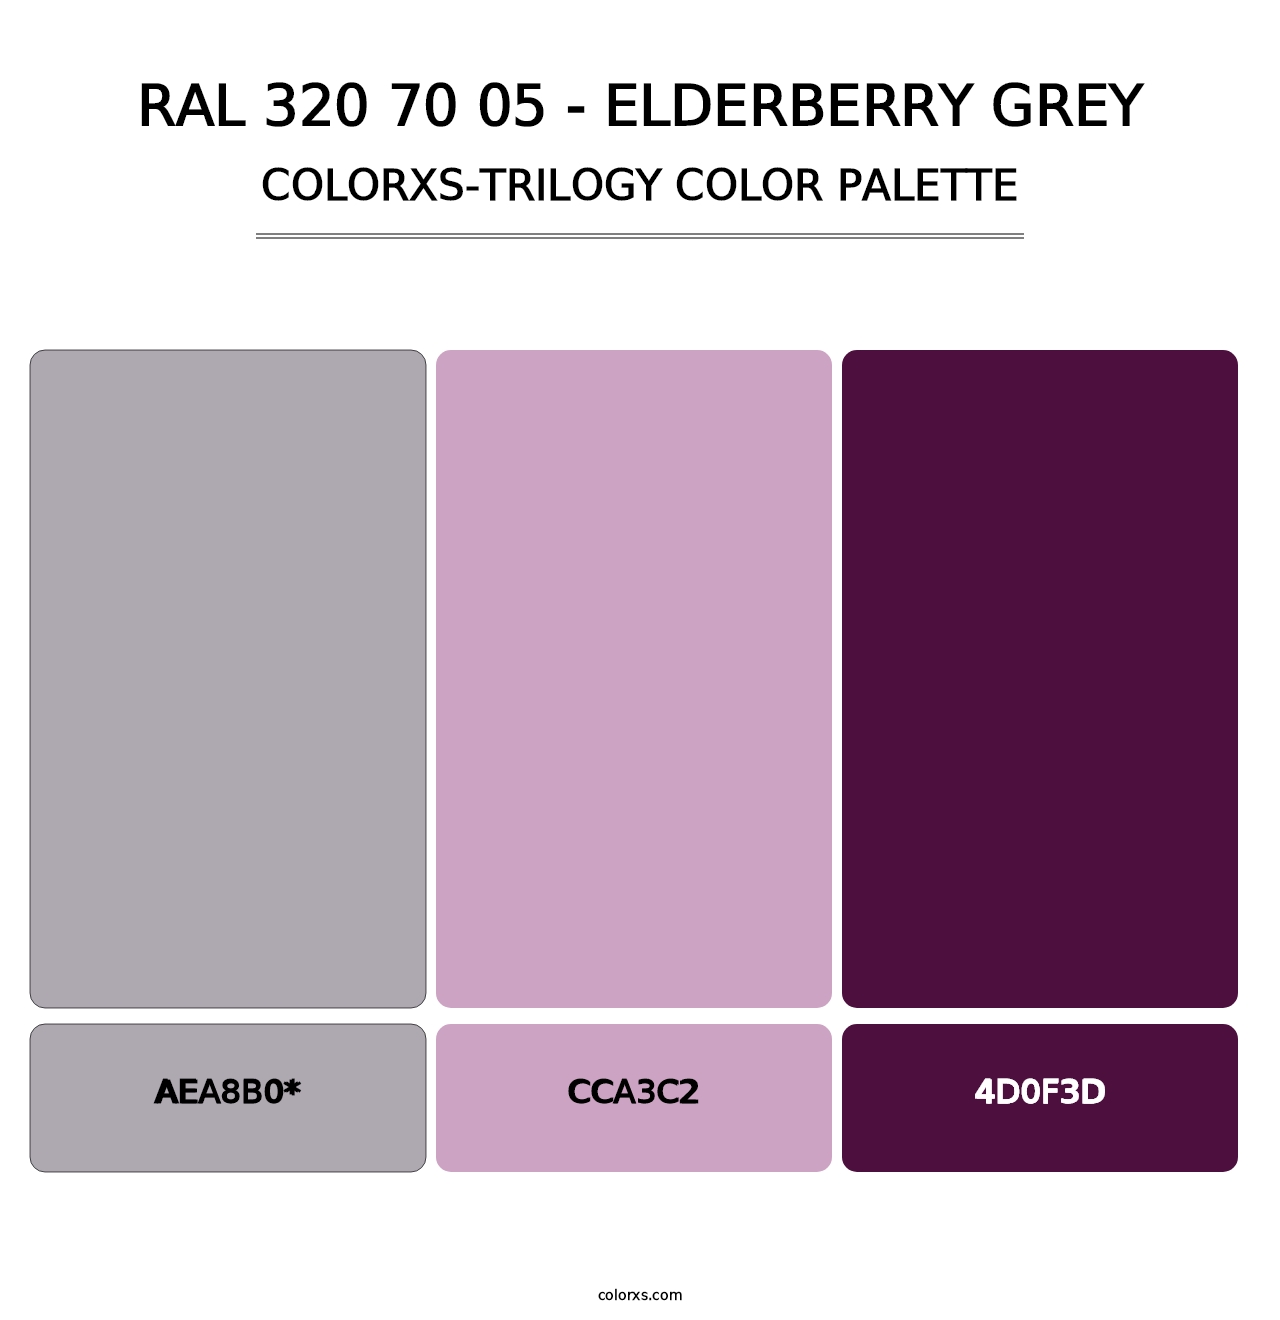 RAL 320 70 05 - Elderberry Grey - Colorxs Trilogy Palette